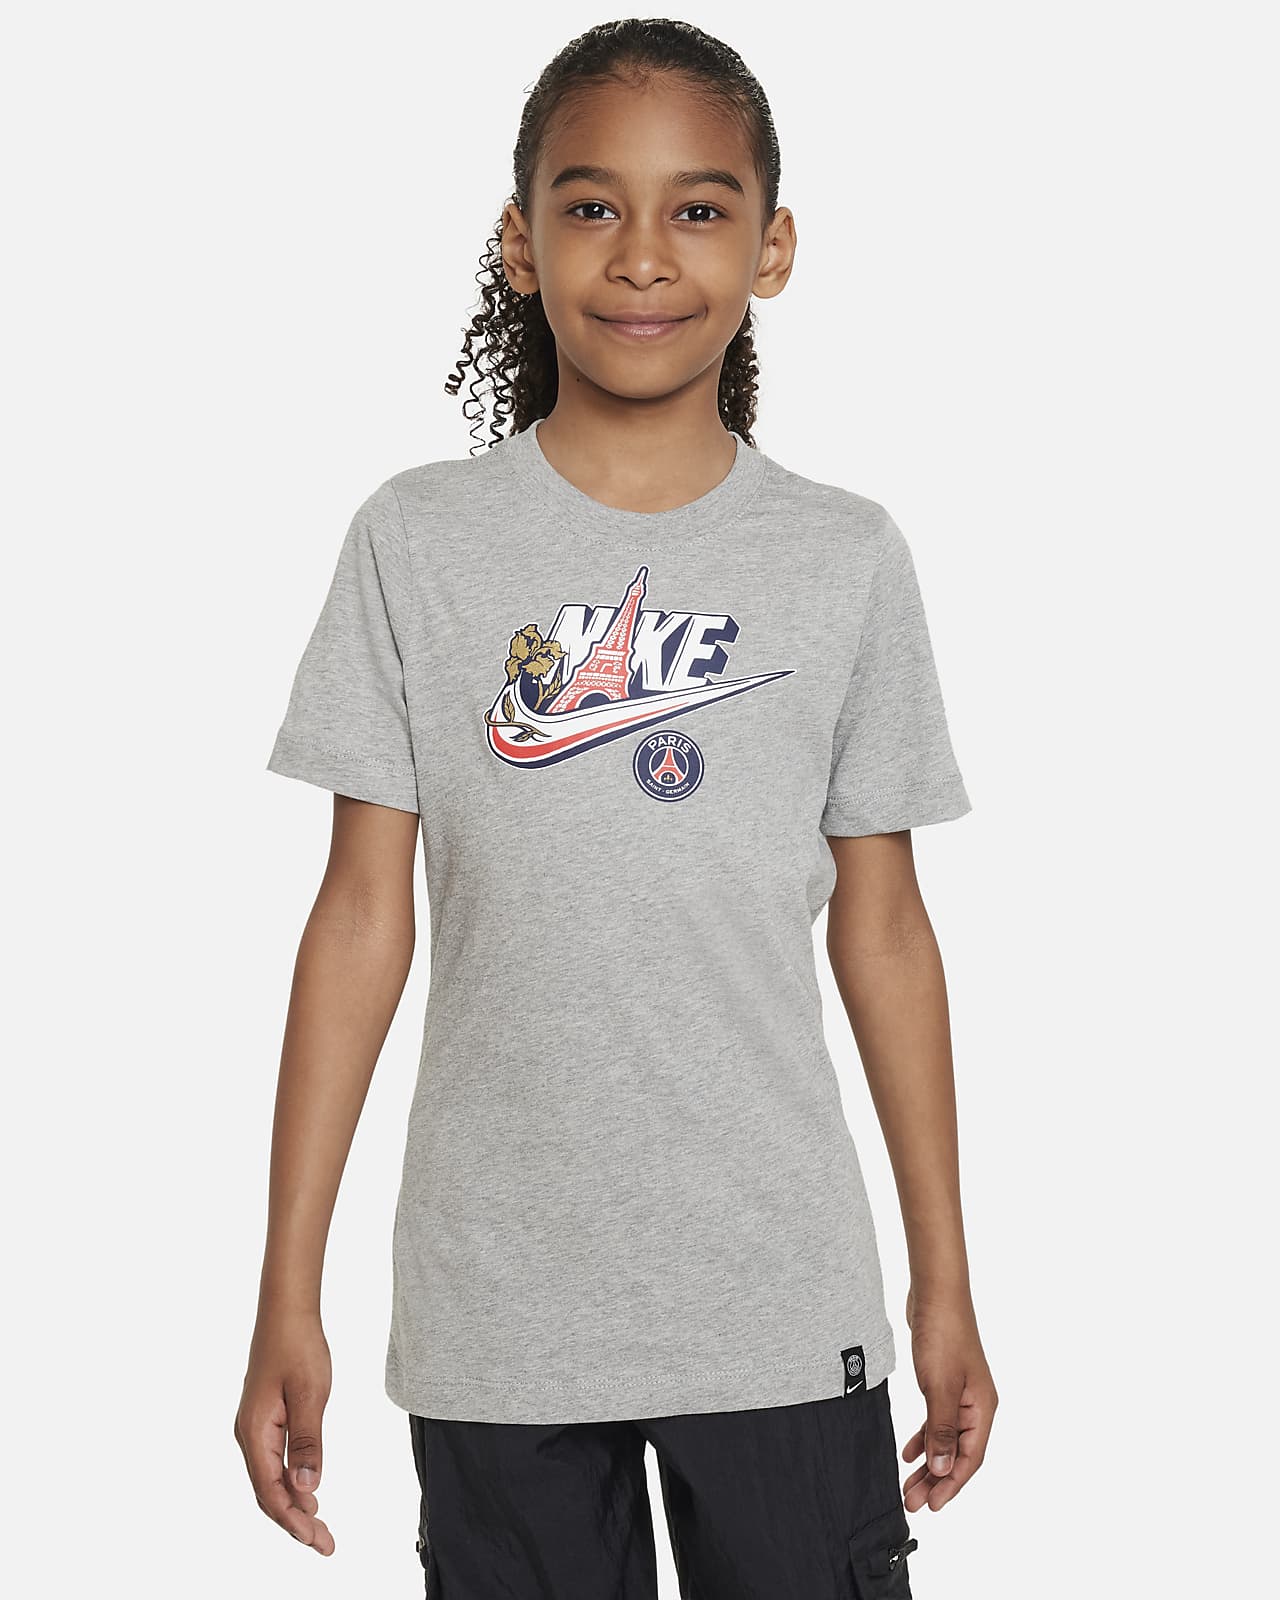 Paris Saint-Germain Big Kids' Nike T-Shirt